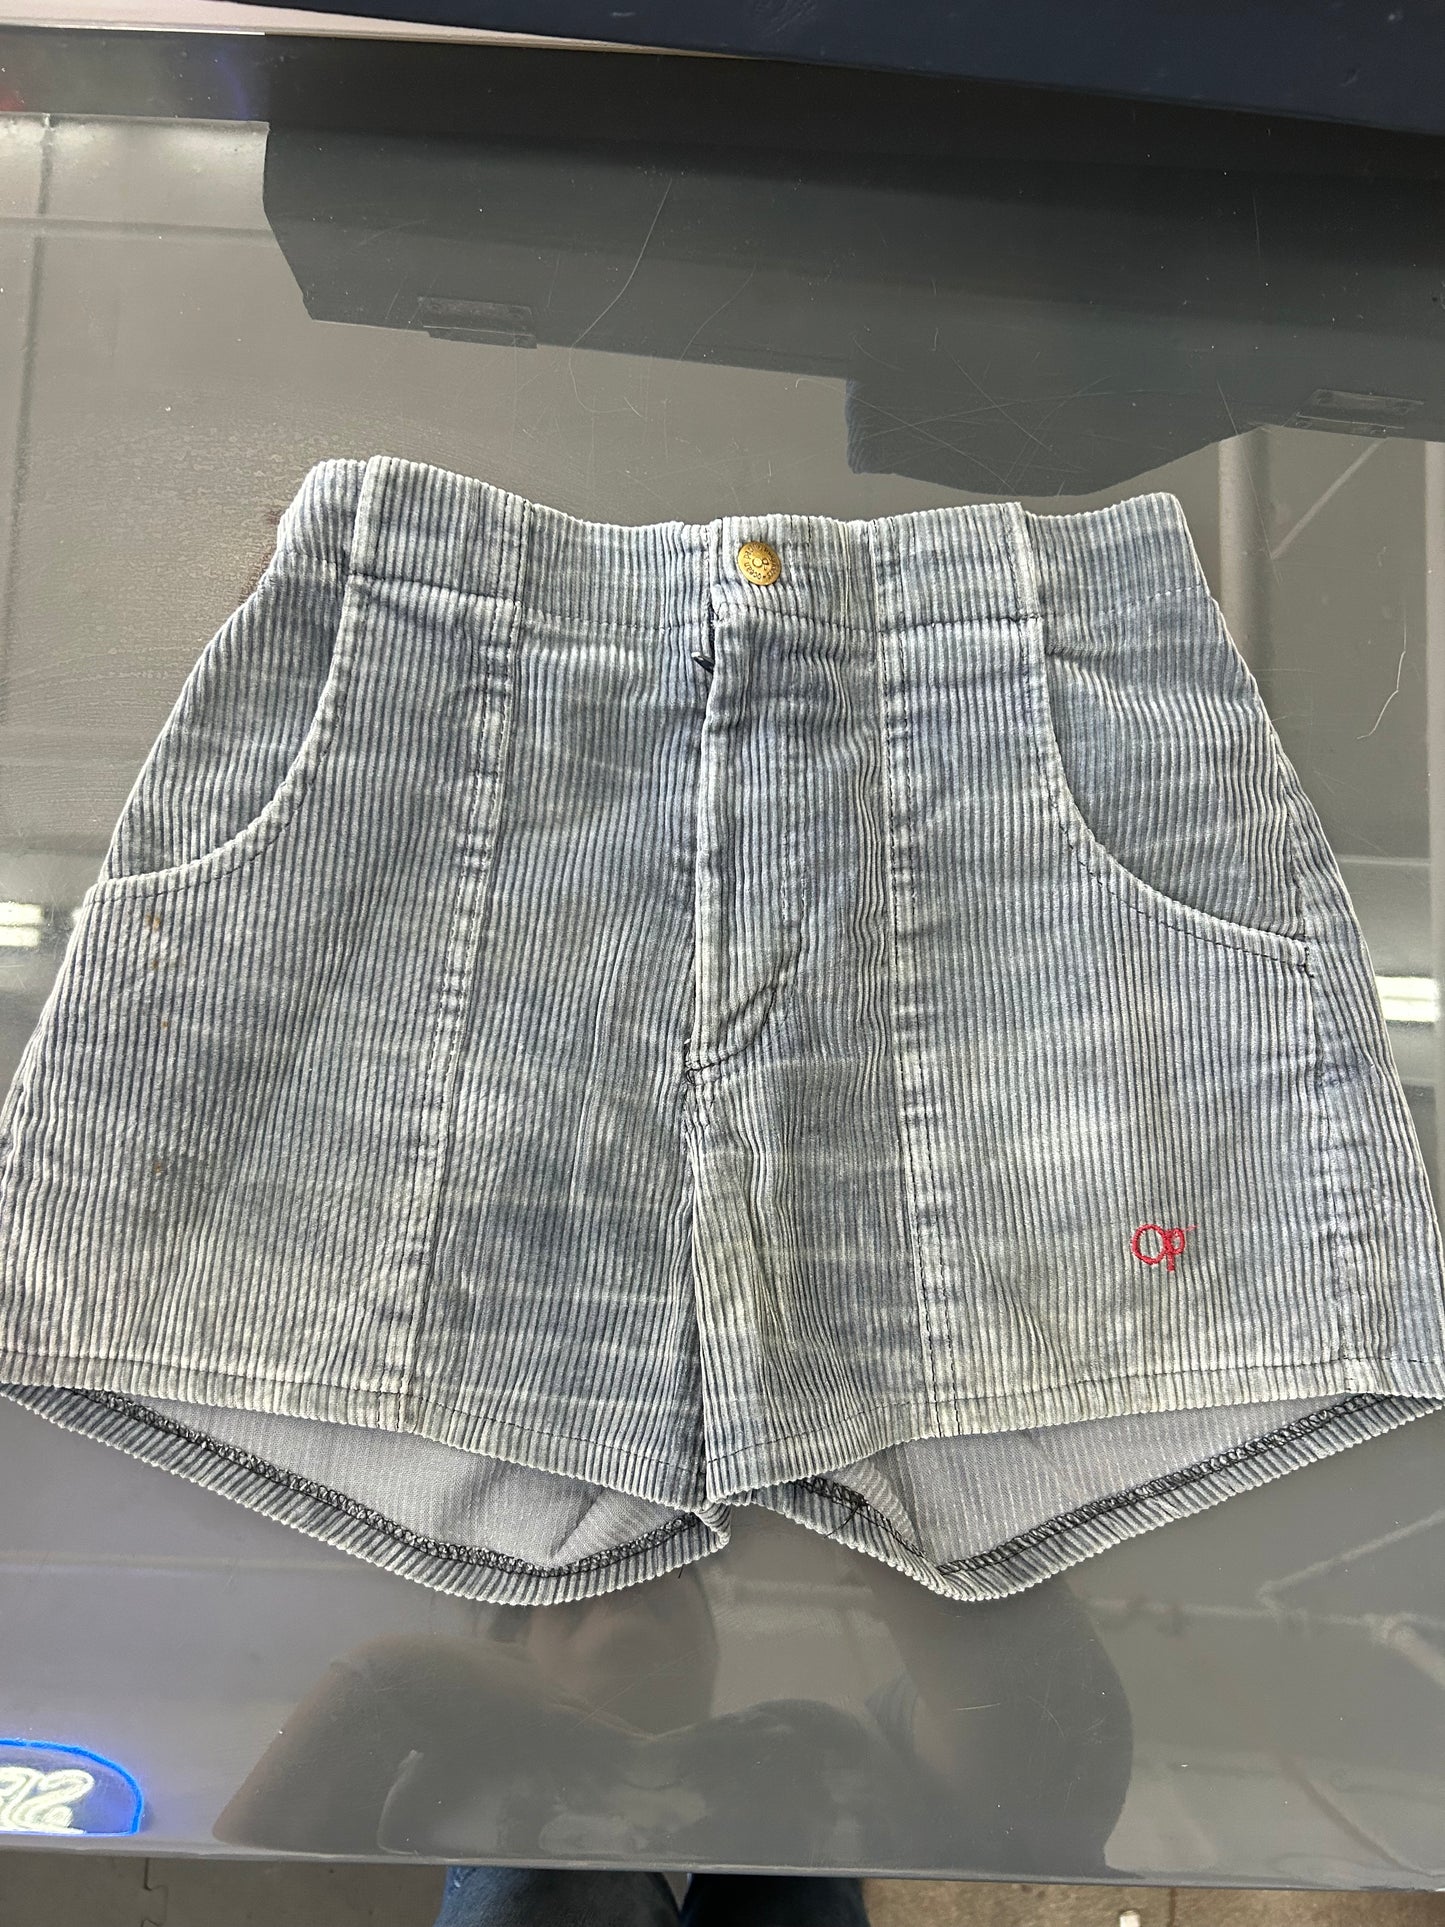 Vintage OP Corduroy Shorts